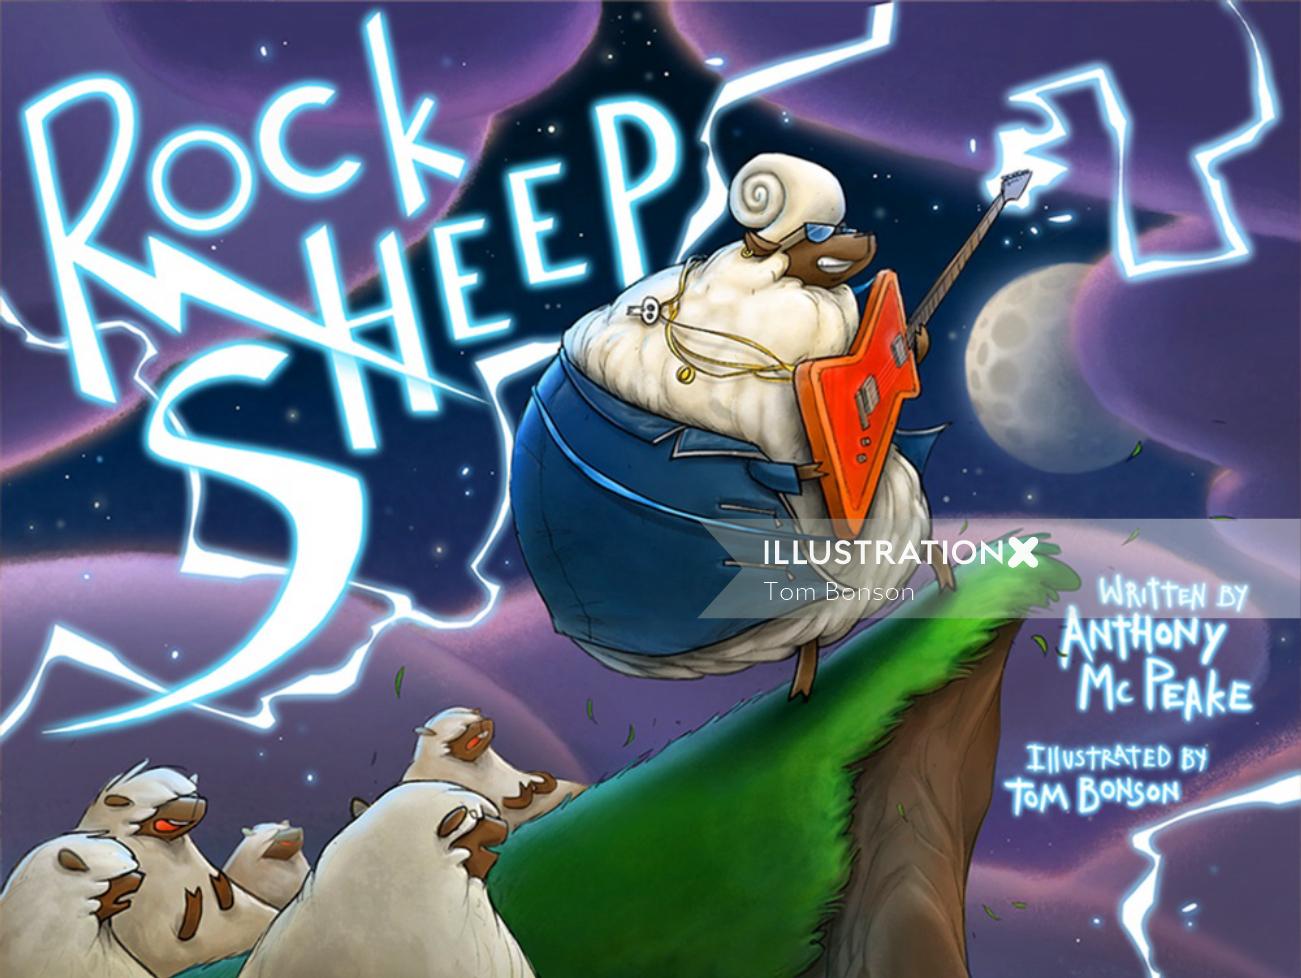 Book Cover Art of Rock Sheep